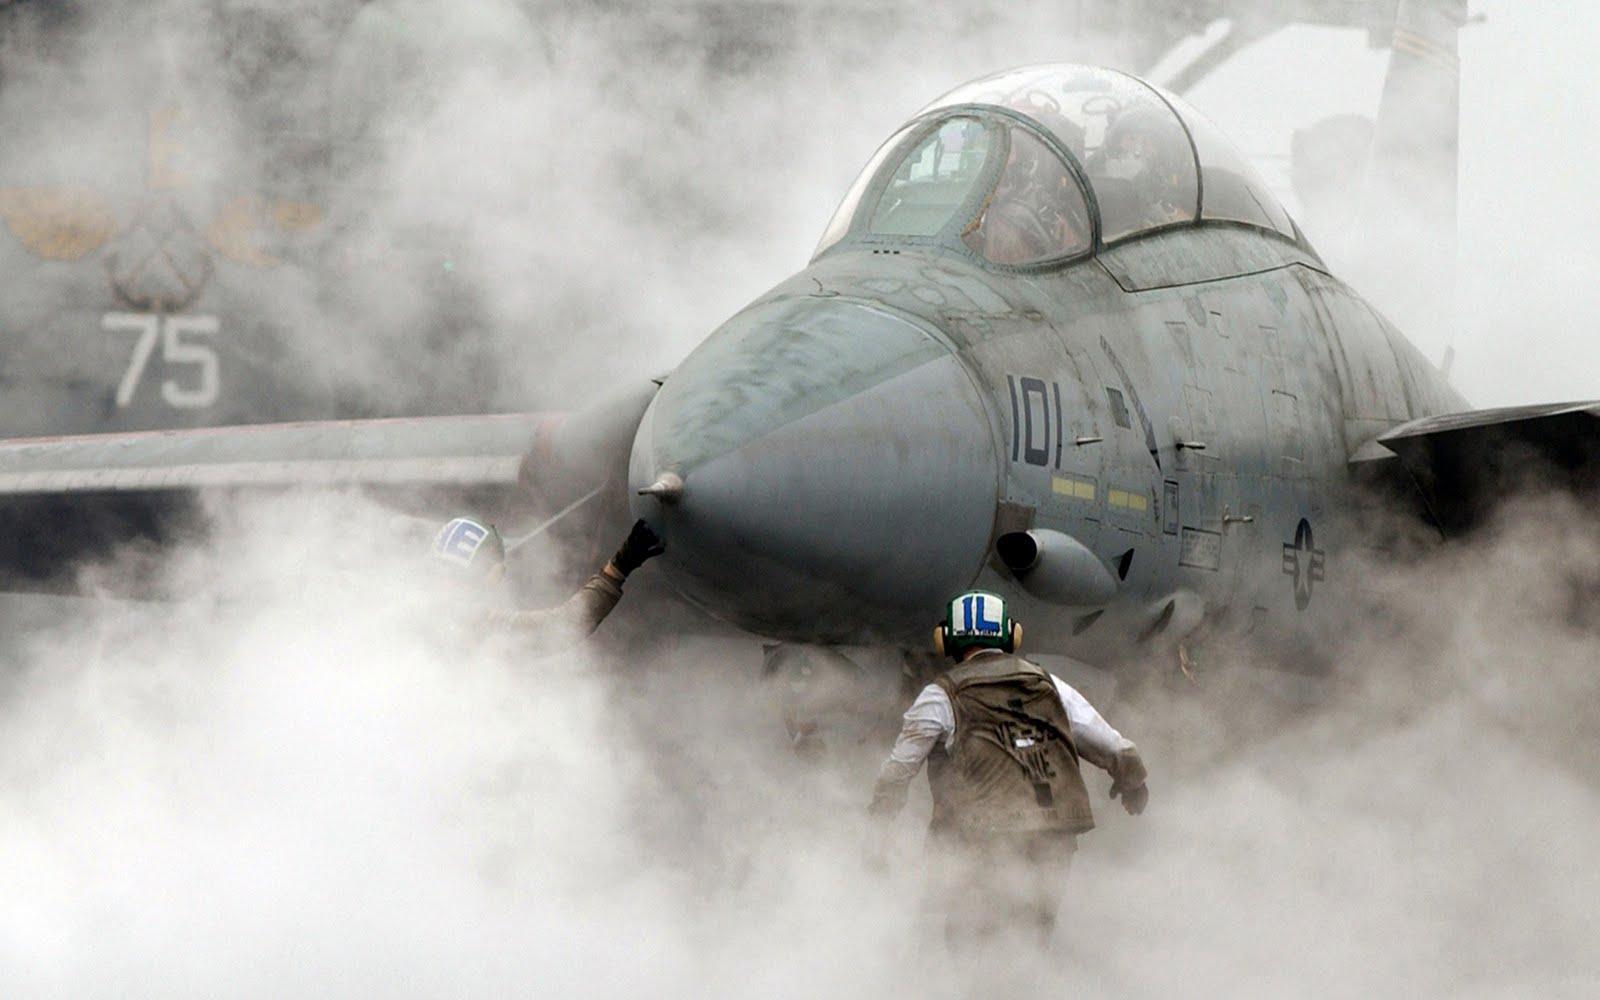 General 1600x1000 military aircraft smoke United States Navy F-14 Tomcat aircraft military military vehicle American aircraft